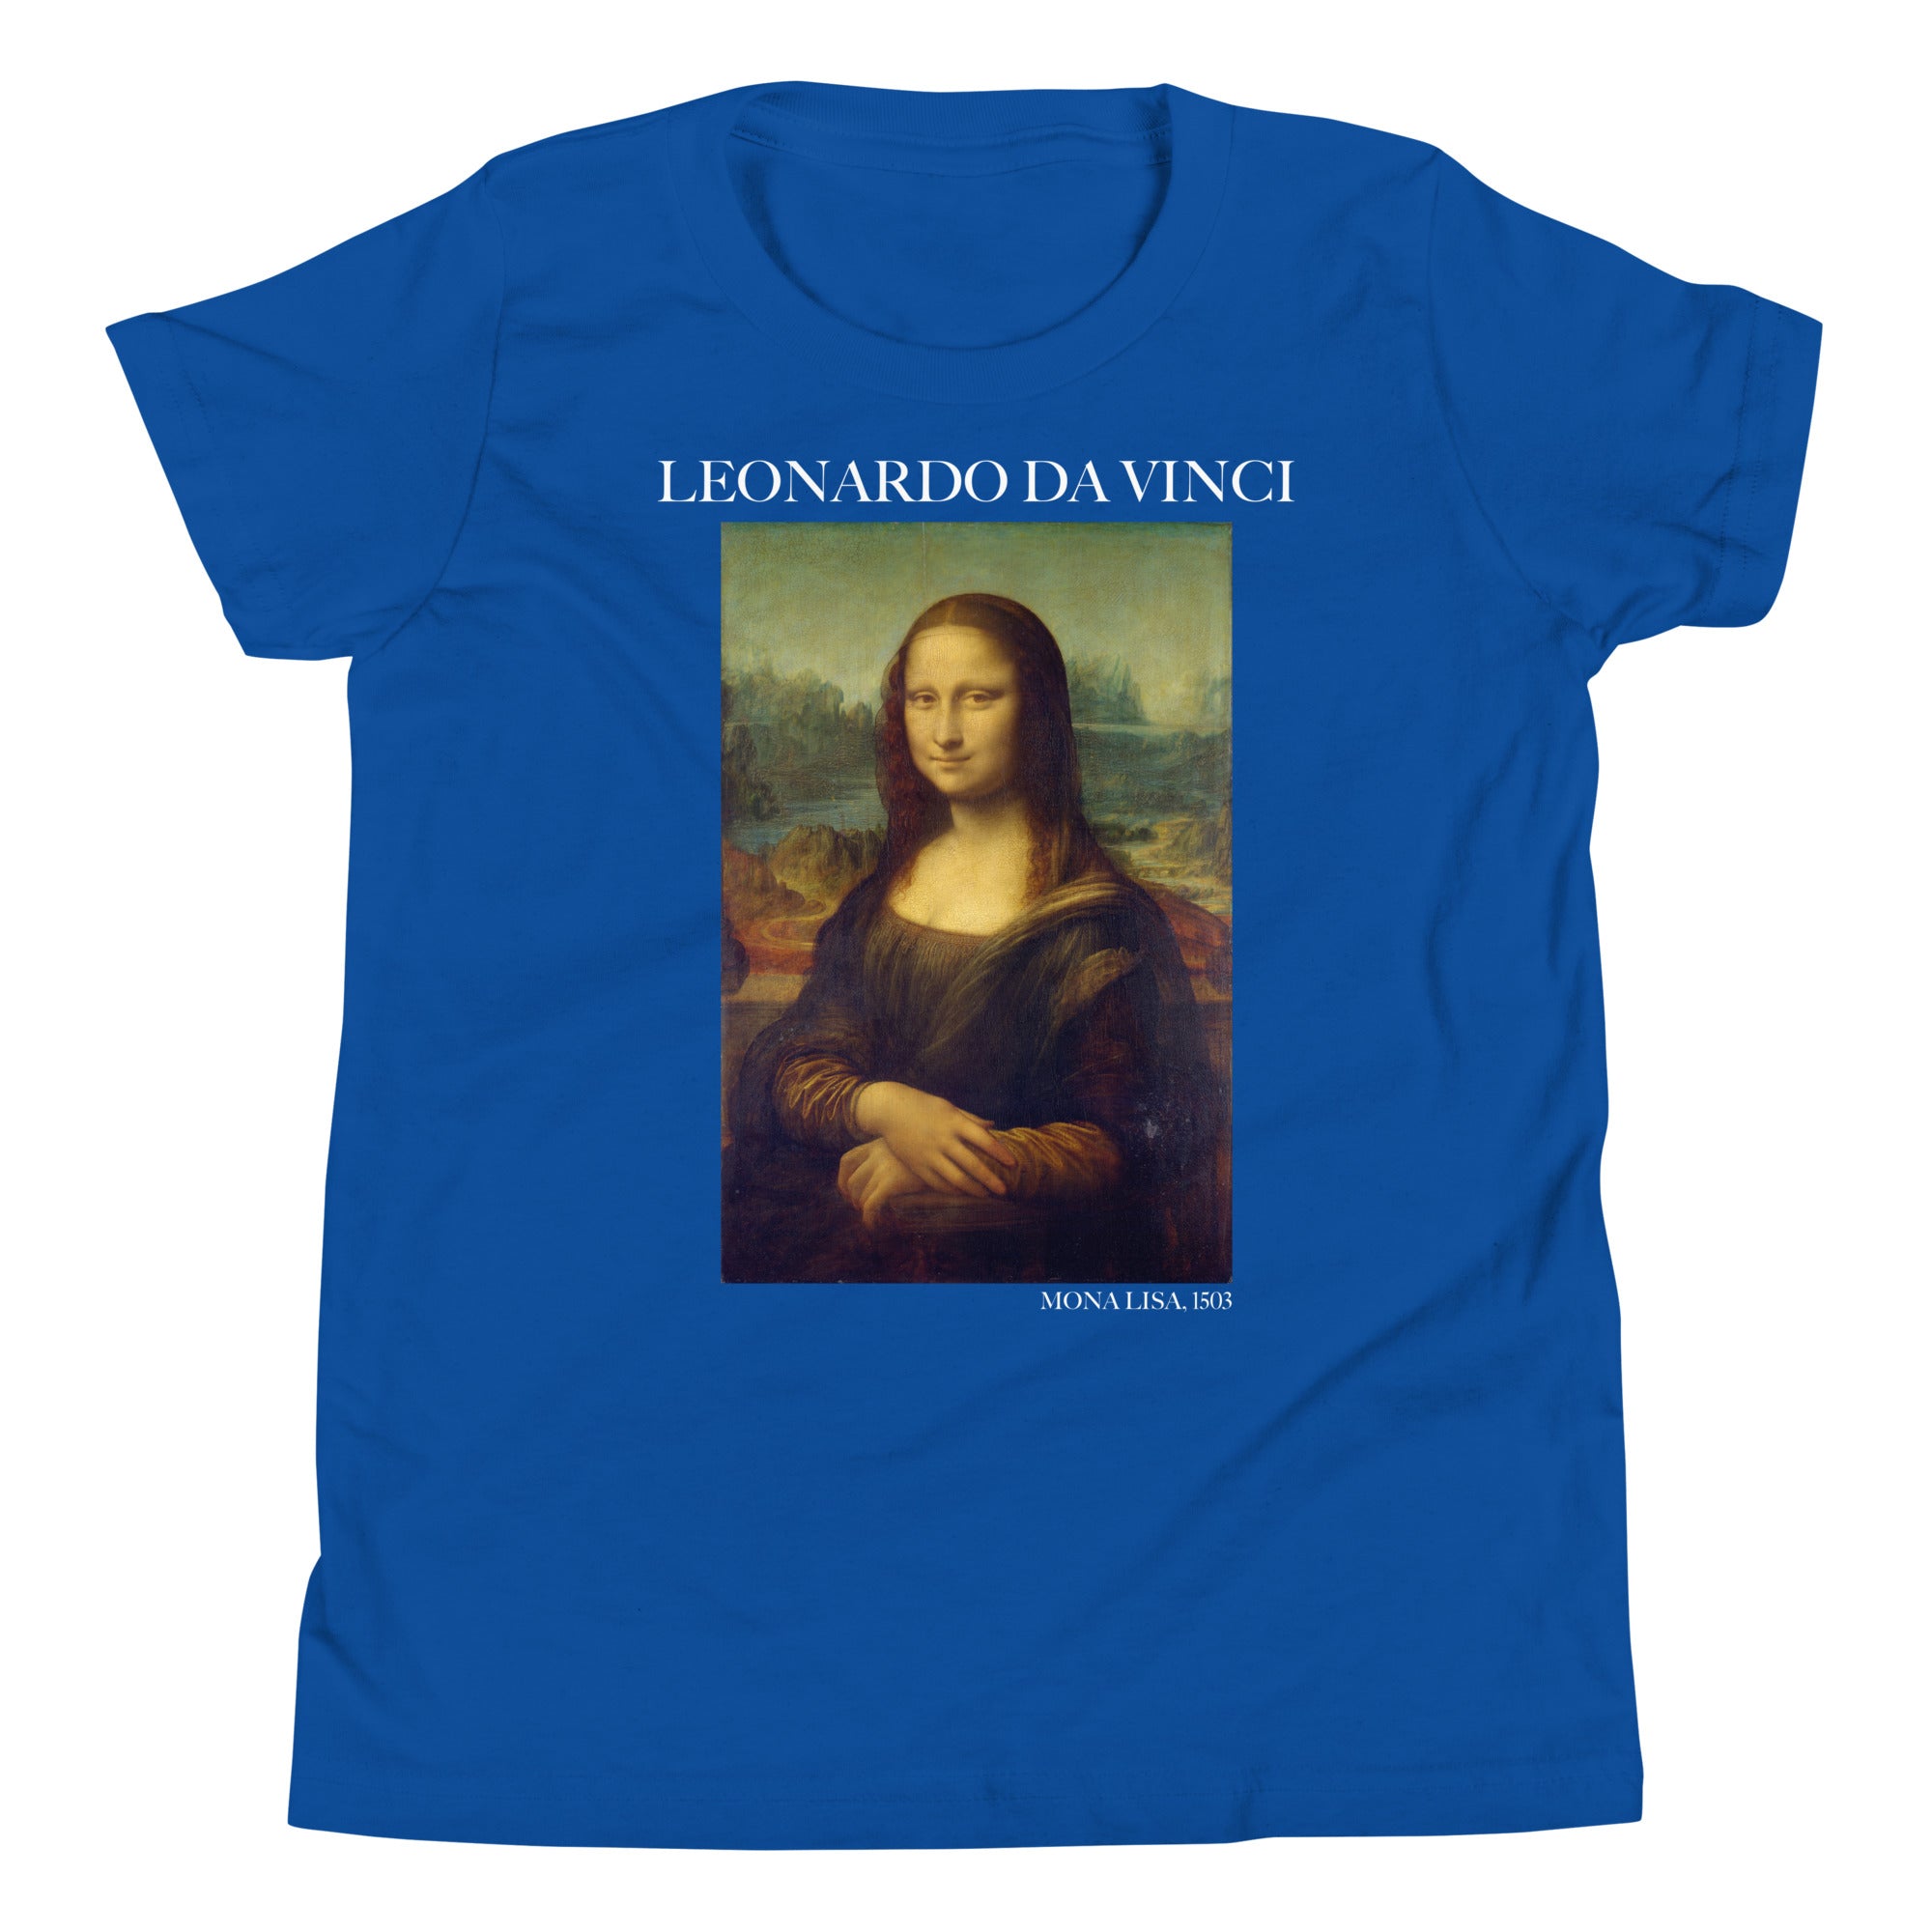 Leonardo da Vinci 'Mona Lisa' Famous Painting Short Sleeve T-Shirt | Premium Youth Art Tee